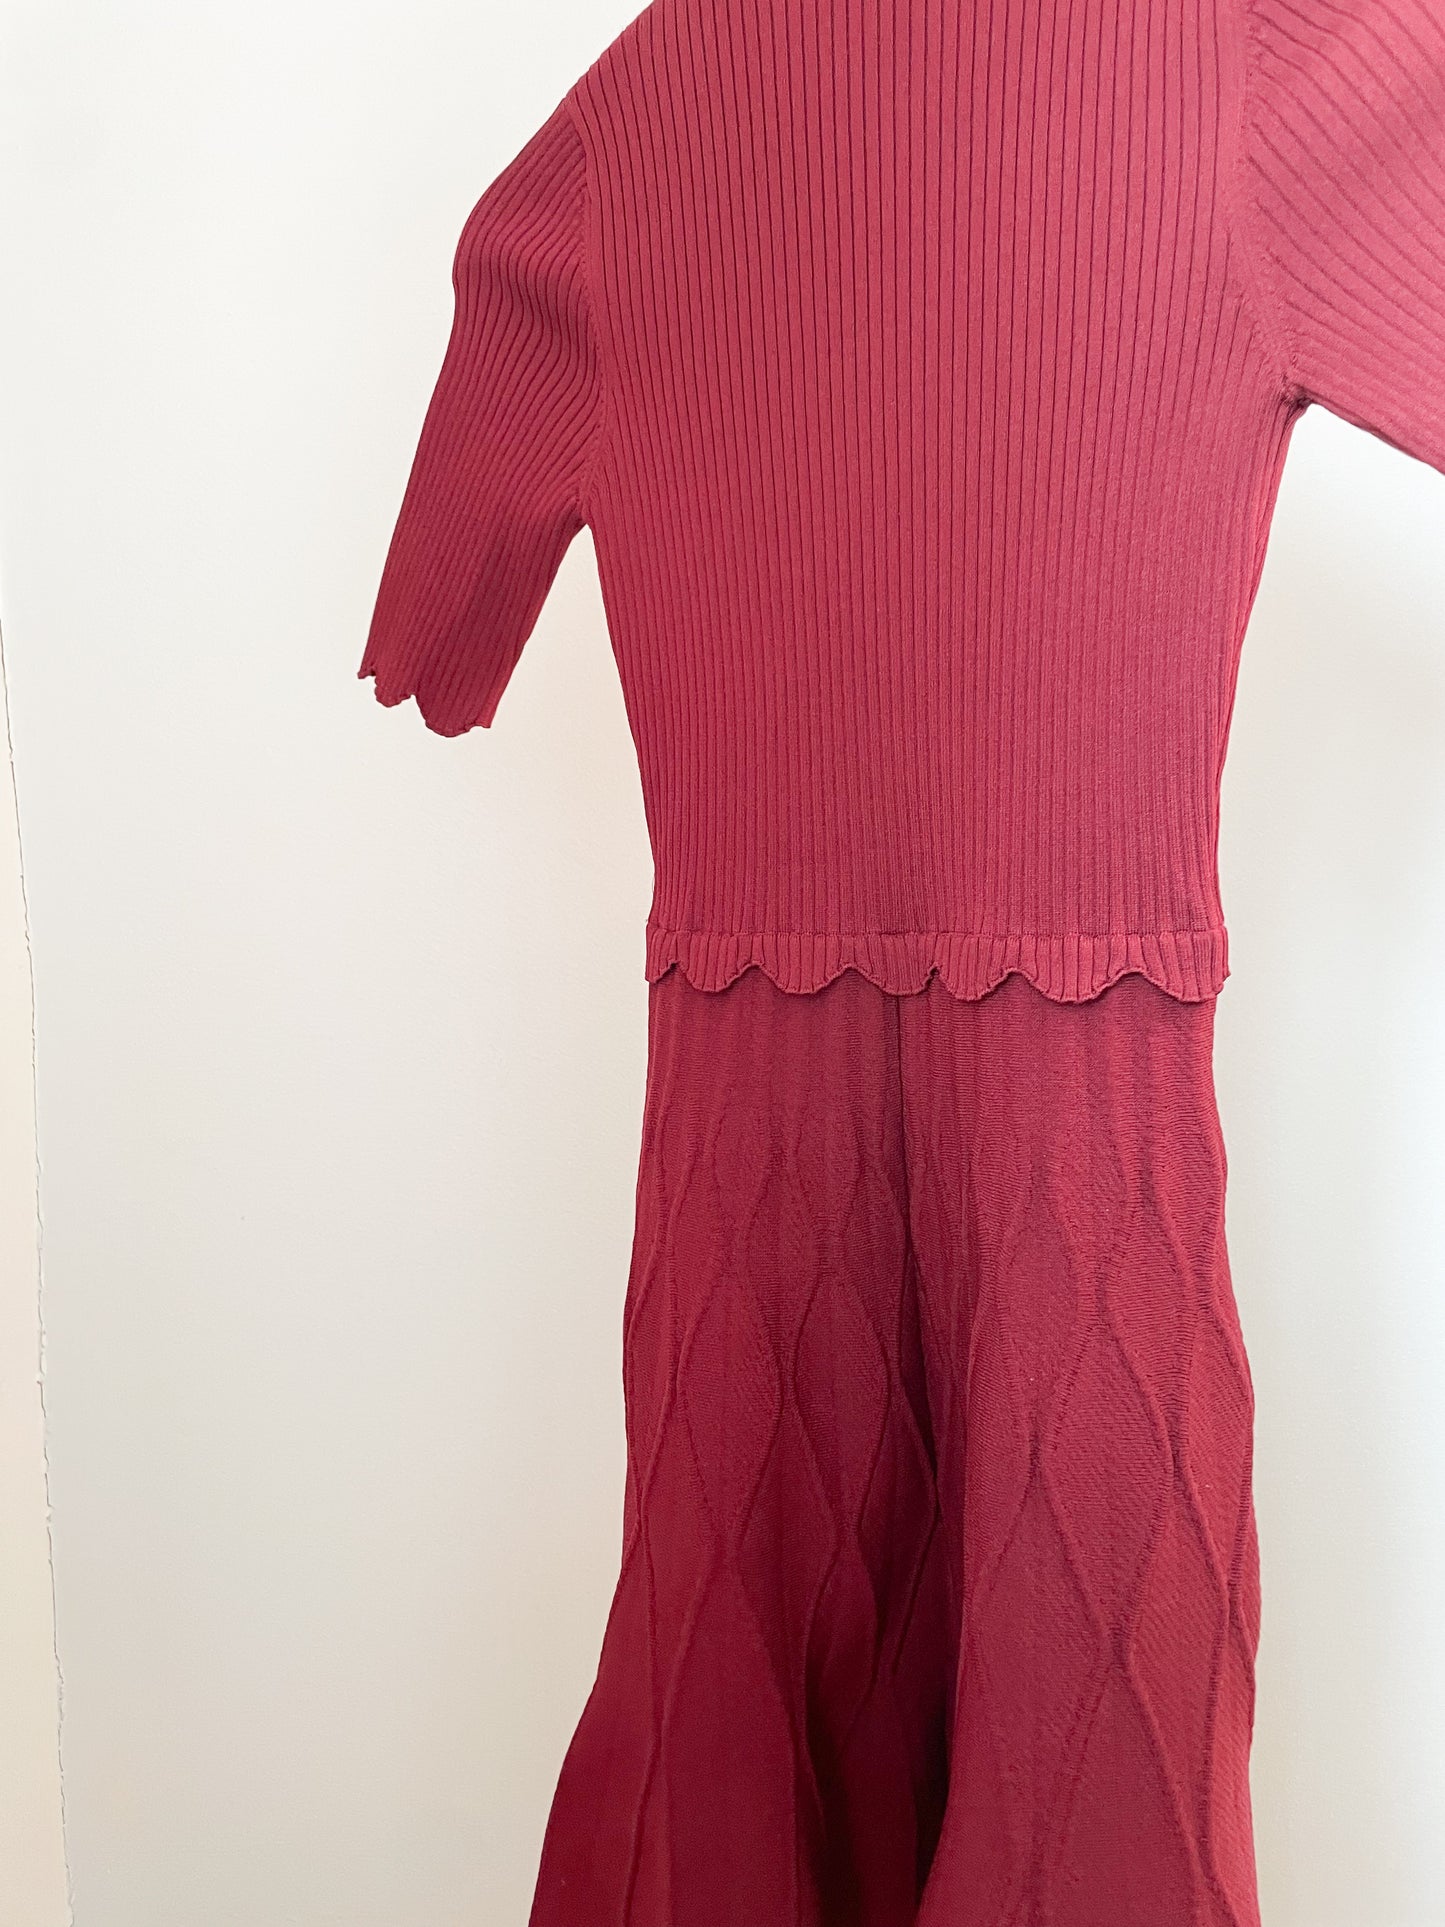 Sandro Paris Wine Red Mock Neck Knit Dress - XS